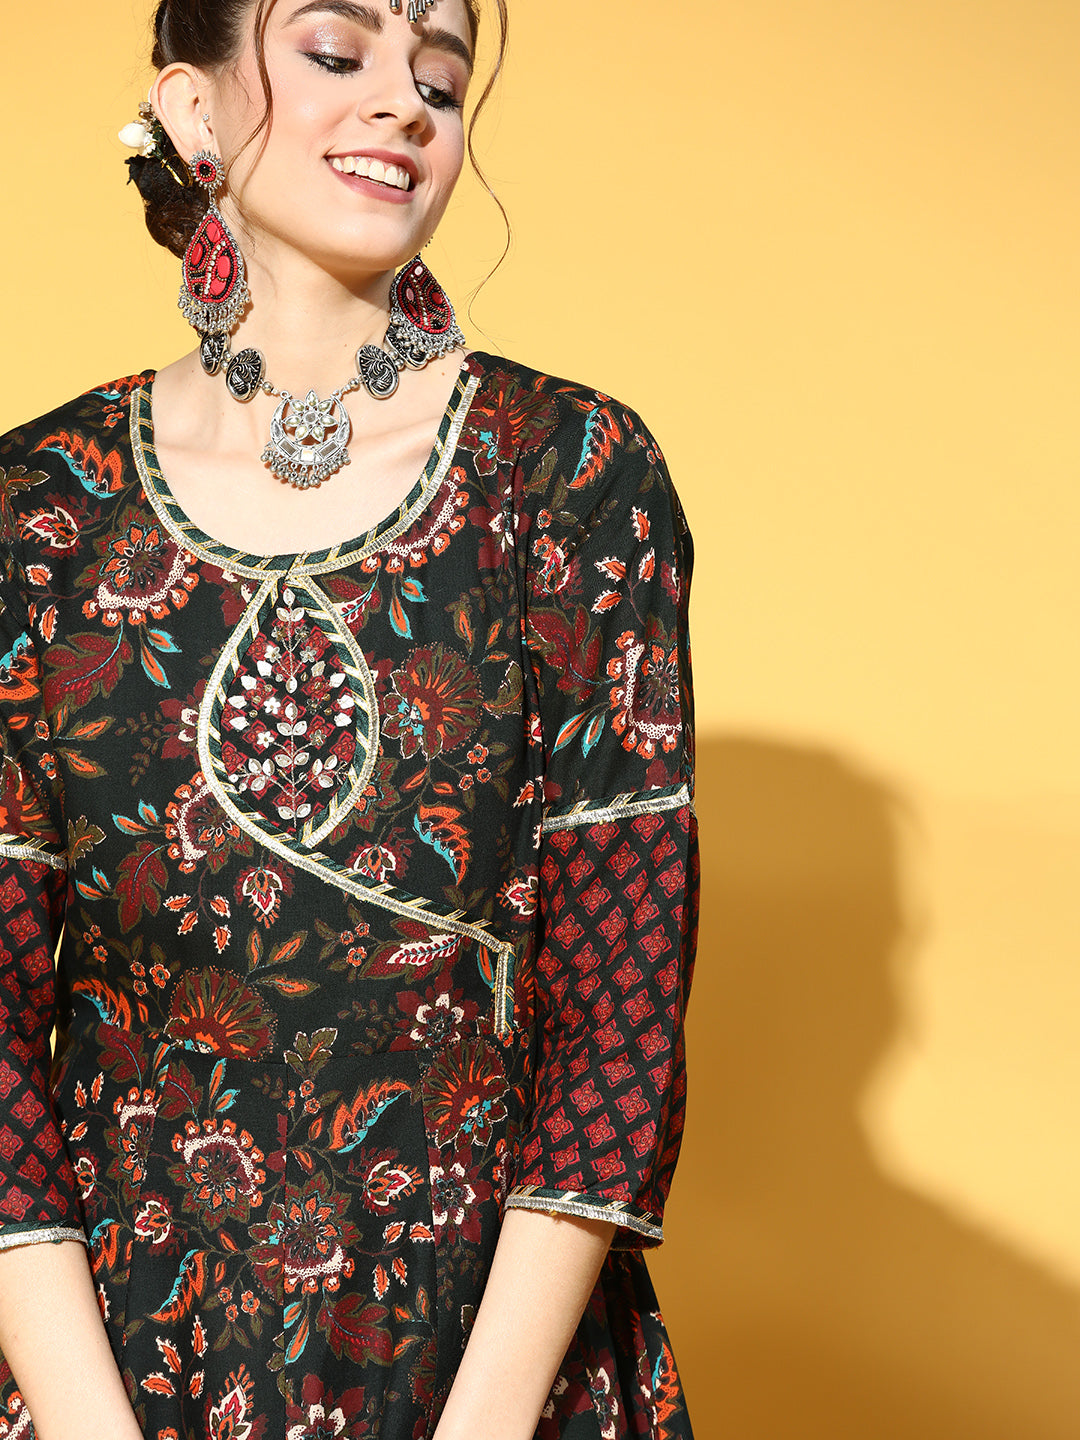 Ishin Women's Cotton Blend Green Embroidered Anarkali Kurta